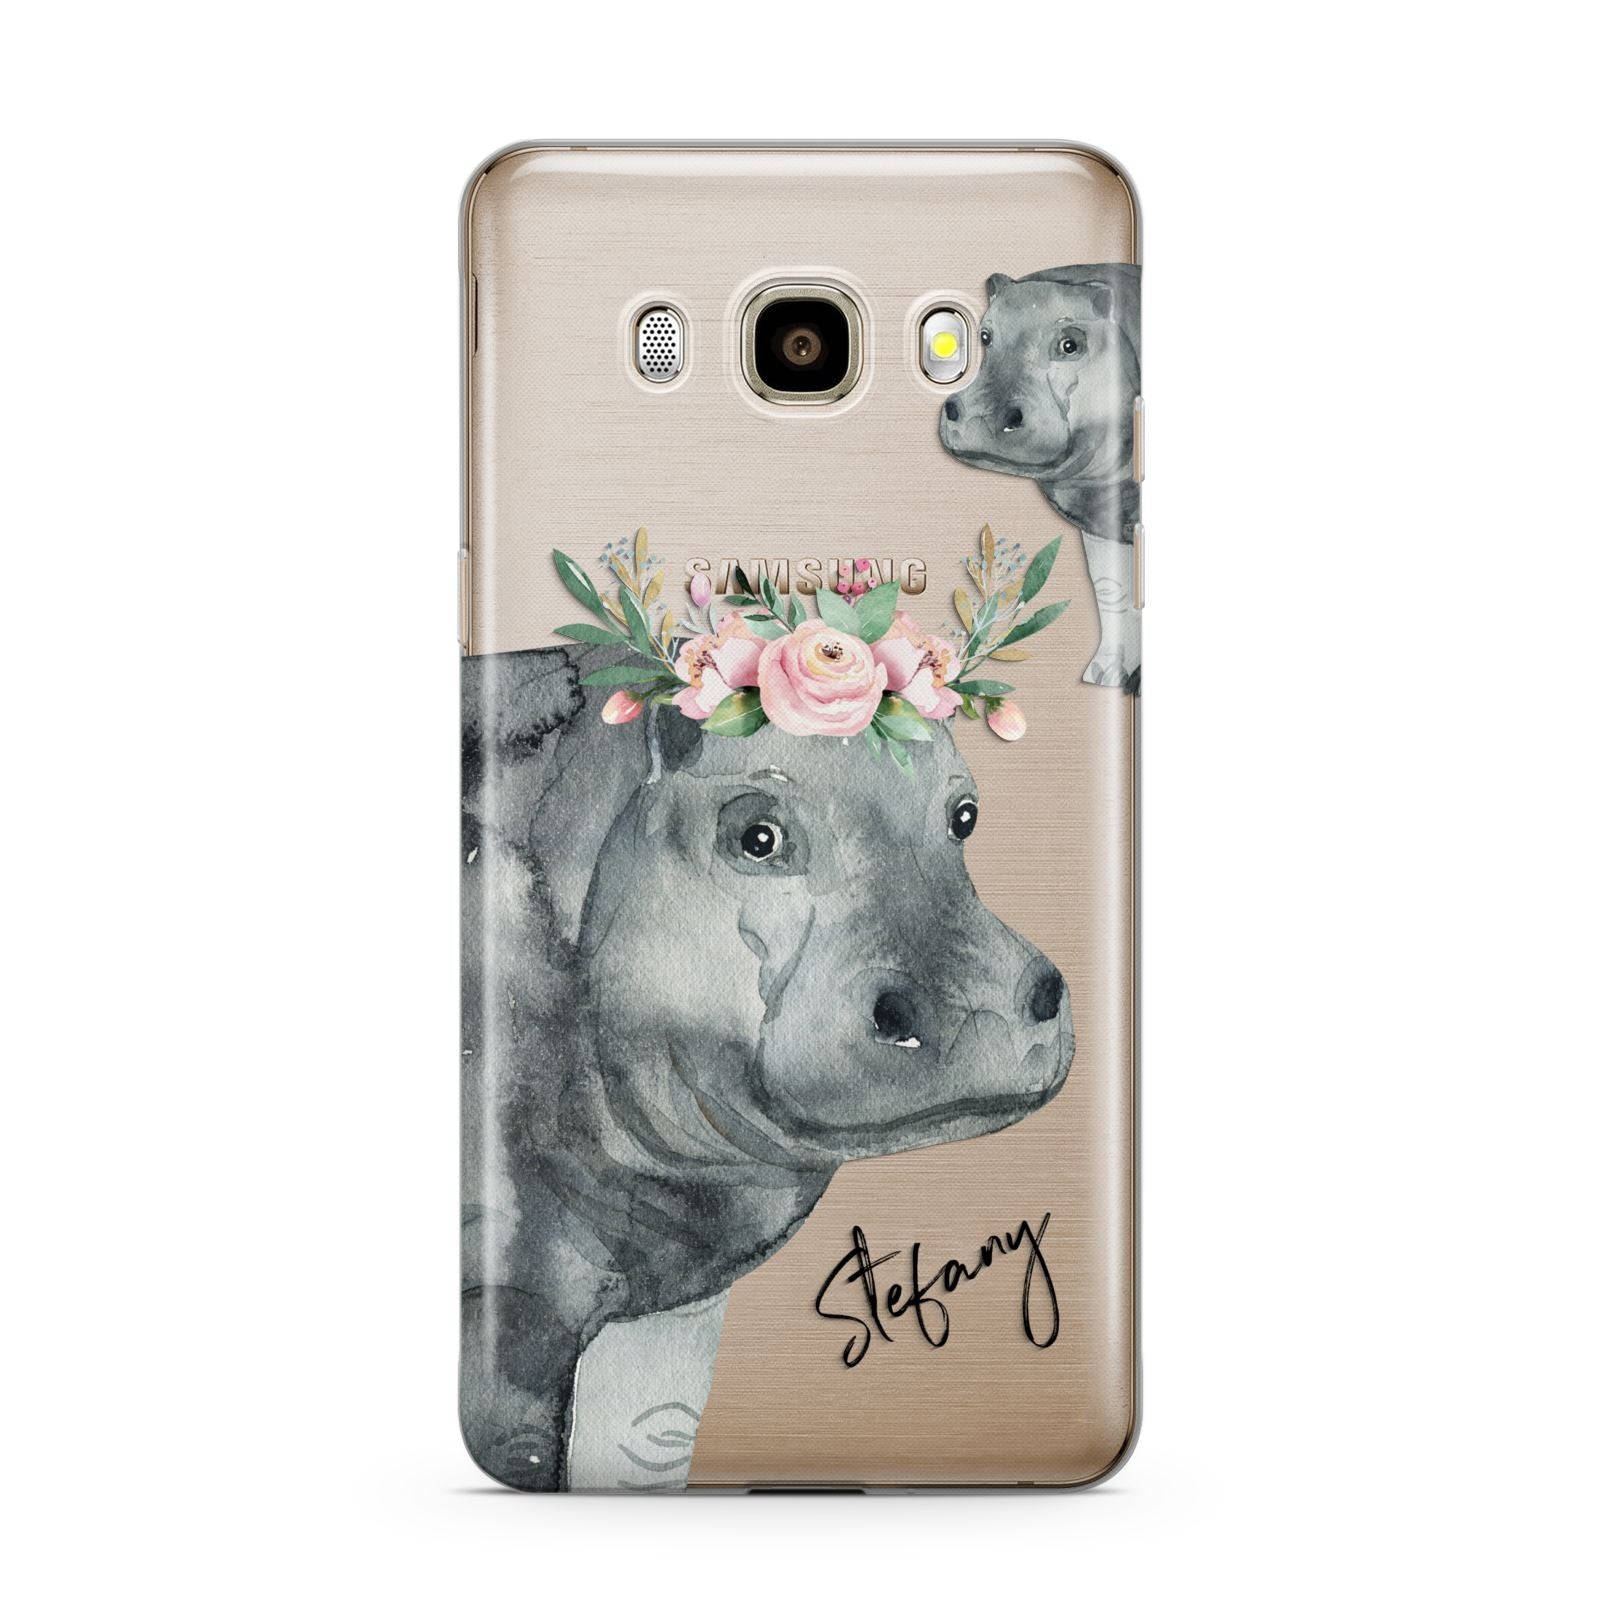 Personalised Hippopotamus Samsung Galaxy J7 2016 Case on gold phone